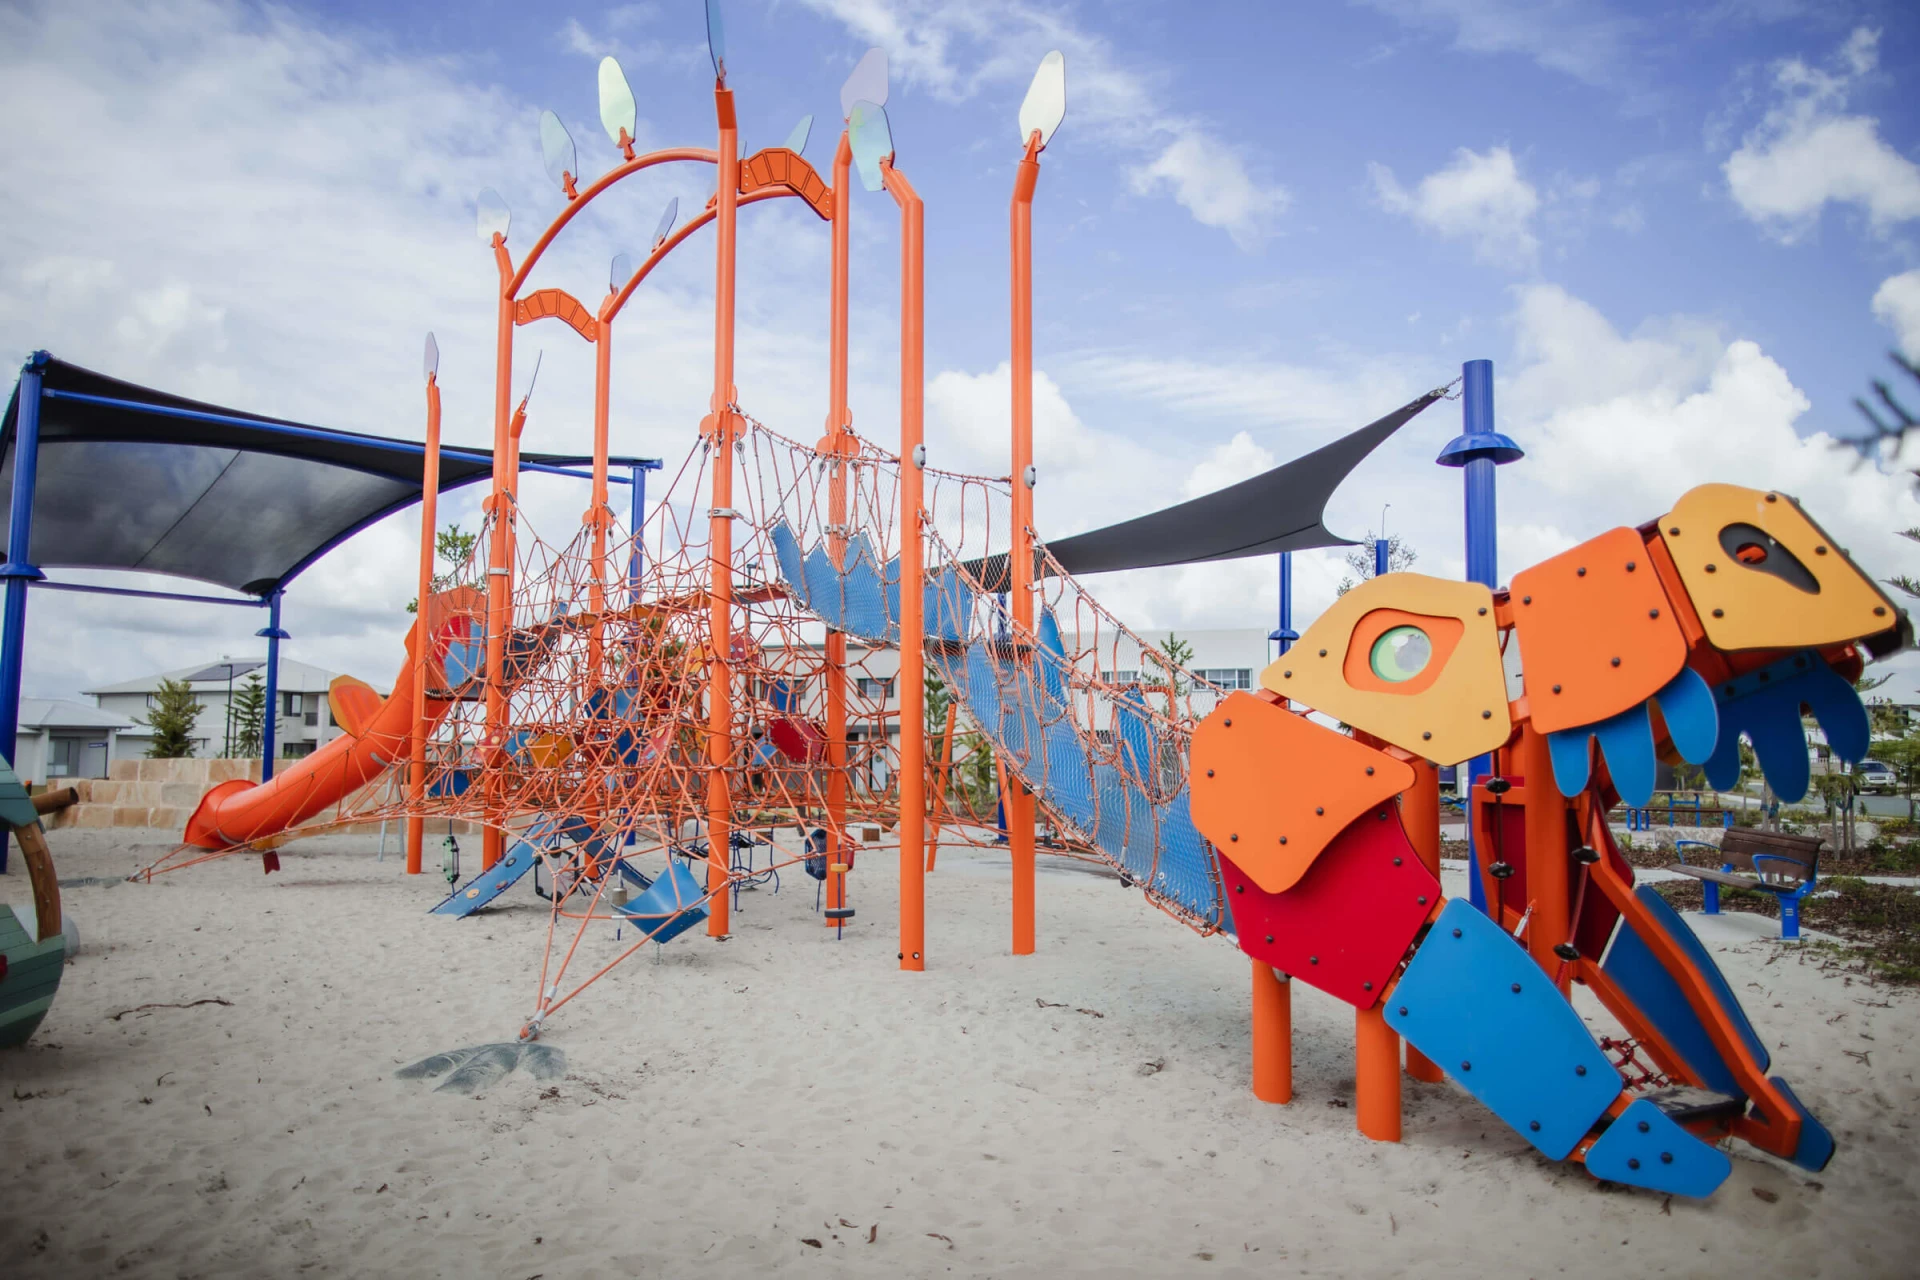 Custom rope playground in Australia picturing an orange and blue dinosaur